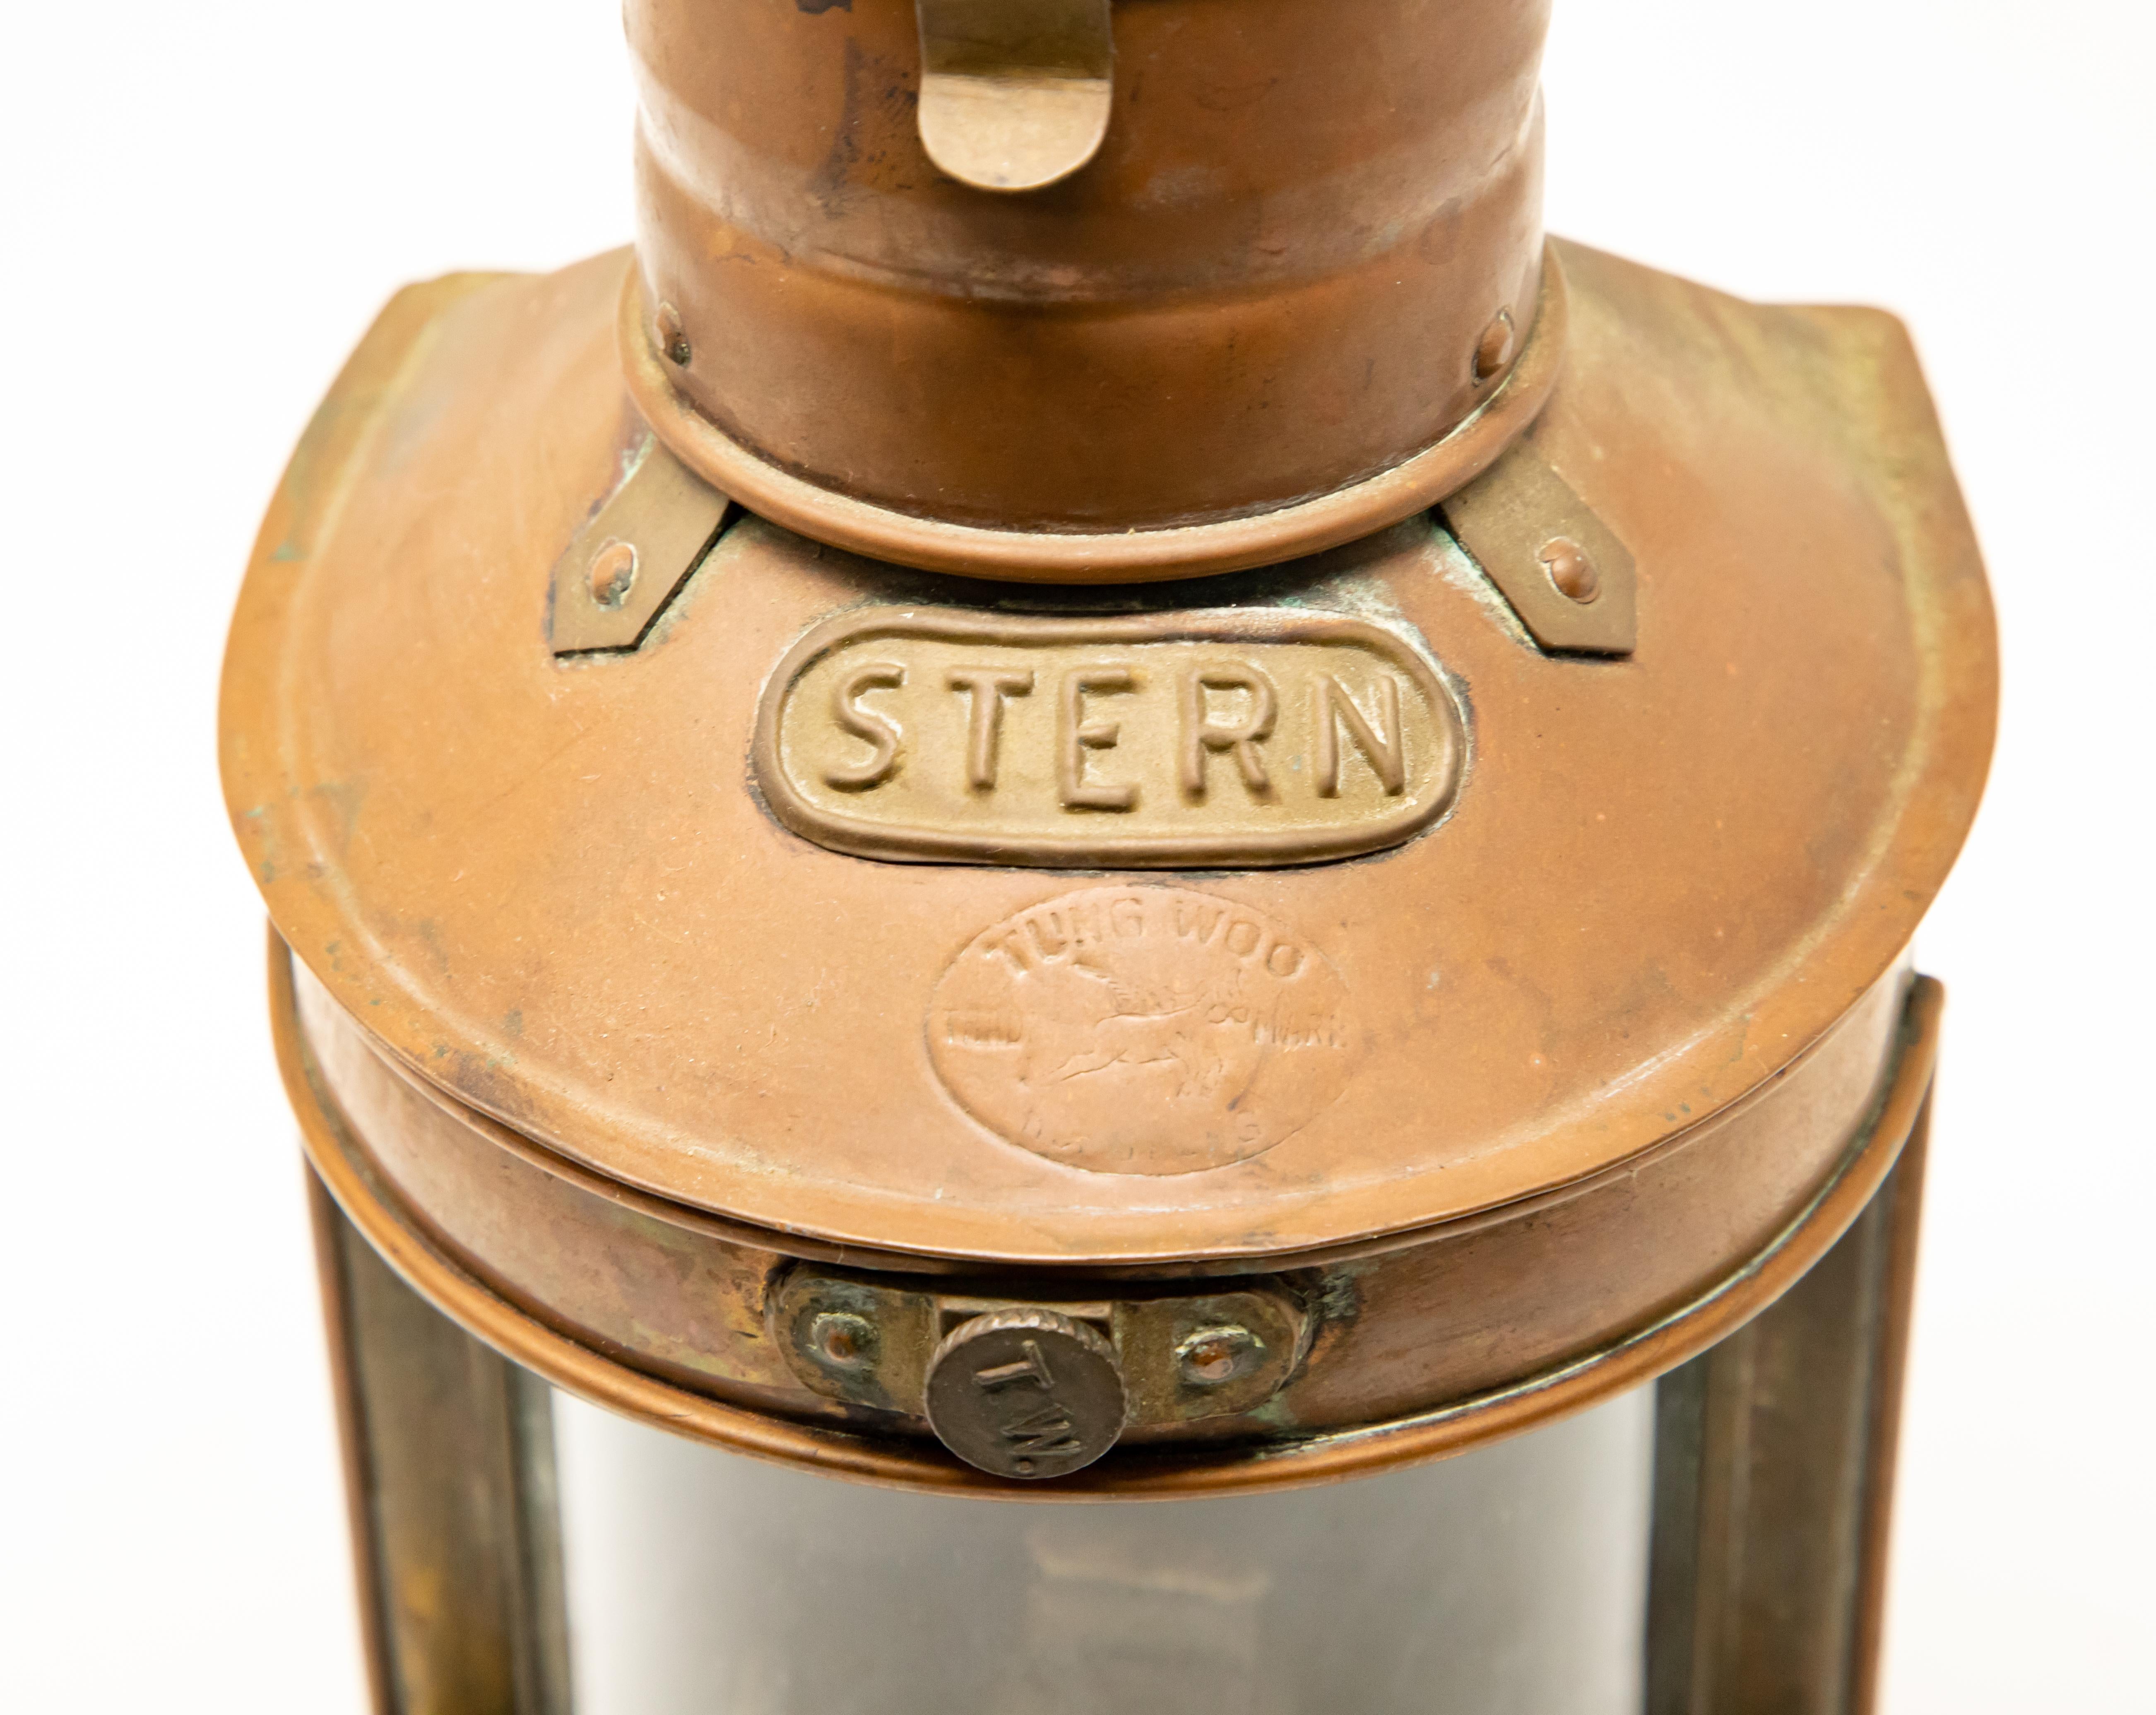 Copper Stern Ship Lantern In Fair Condition For Sale In Cookeville, TN